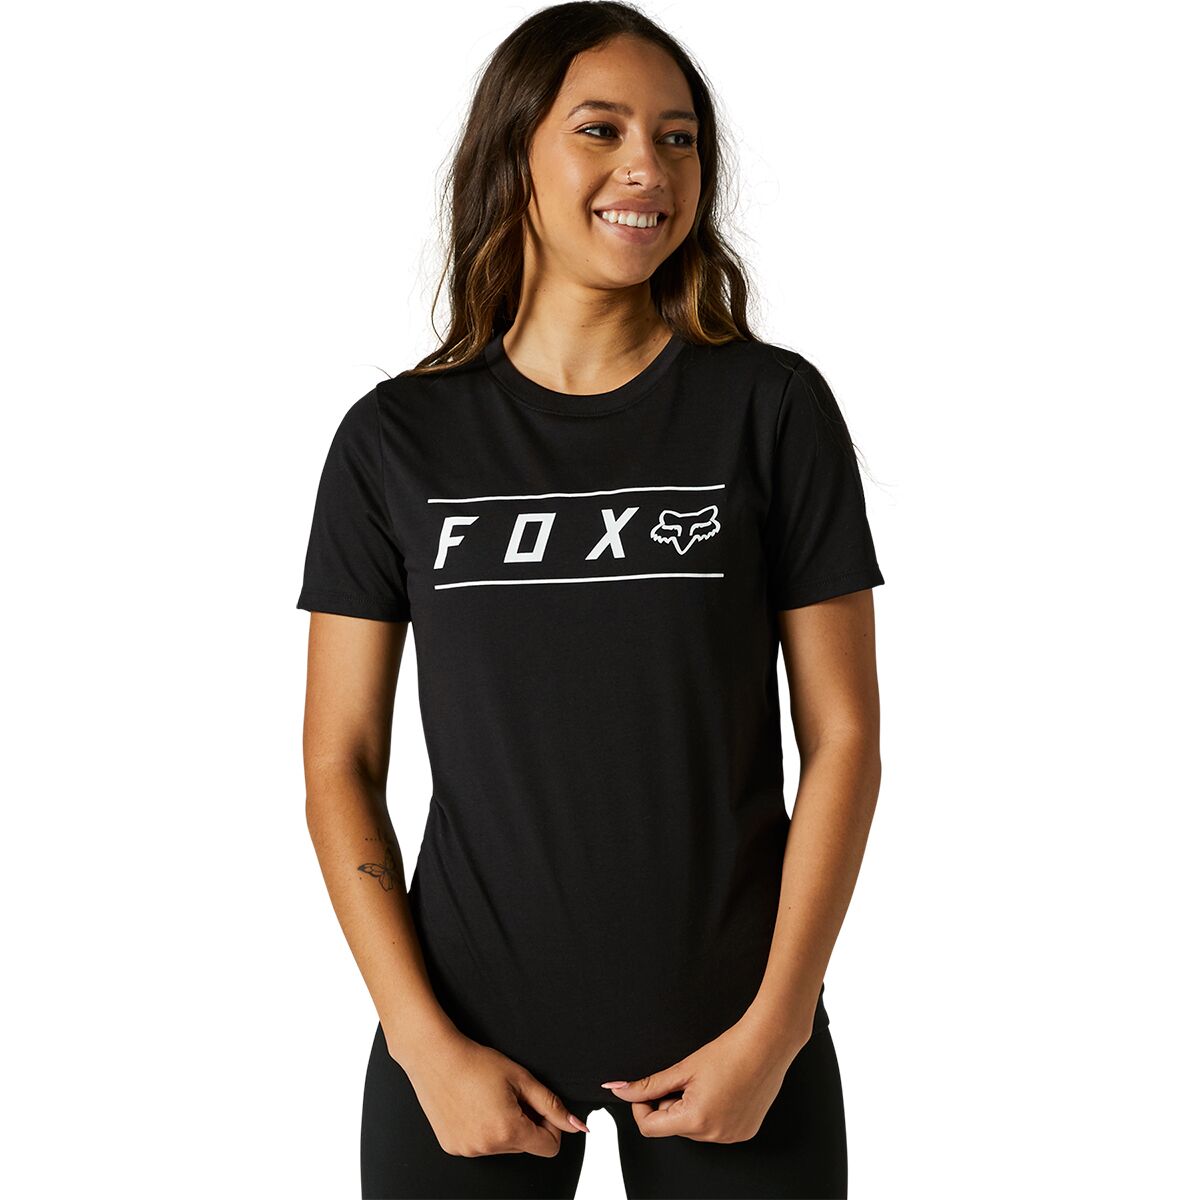 Техническая футболка Pinnacle с короткими рукавами Fox Racing